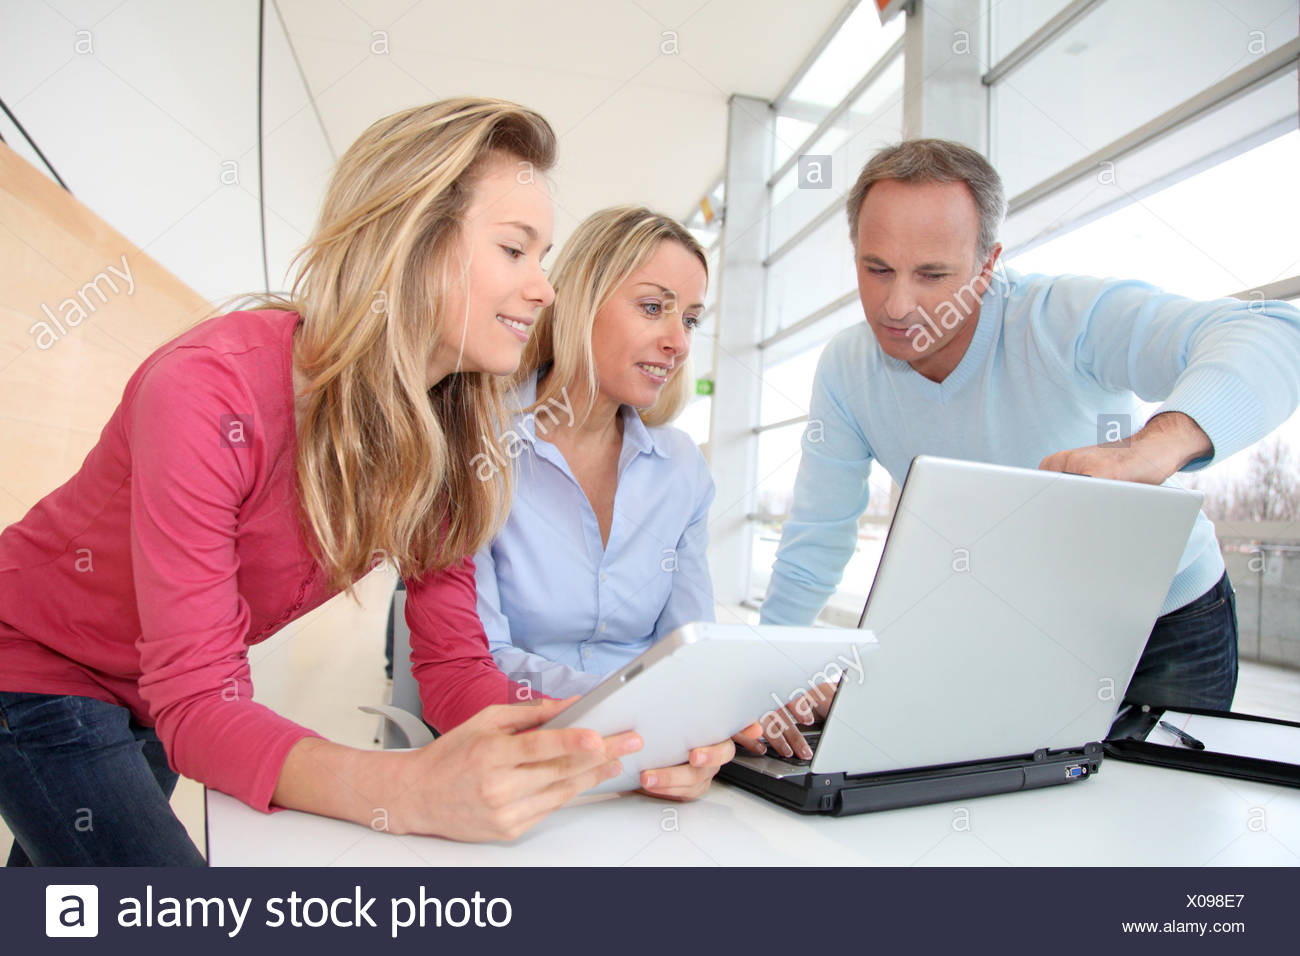 Woman Laptop Notebook Computers Computer Desk Education Teen